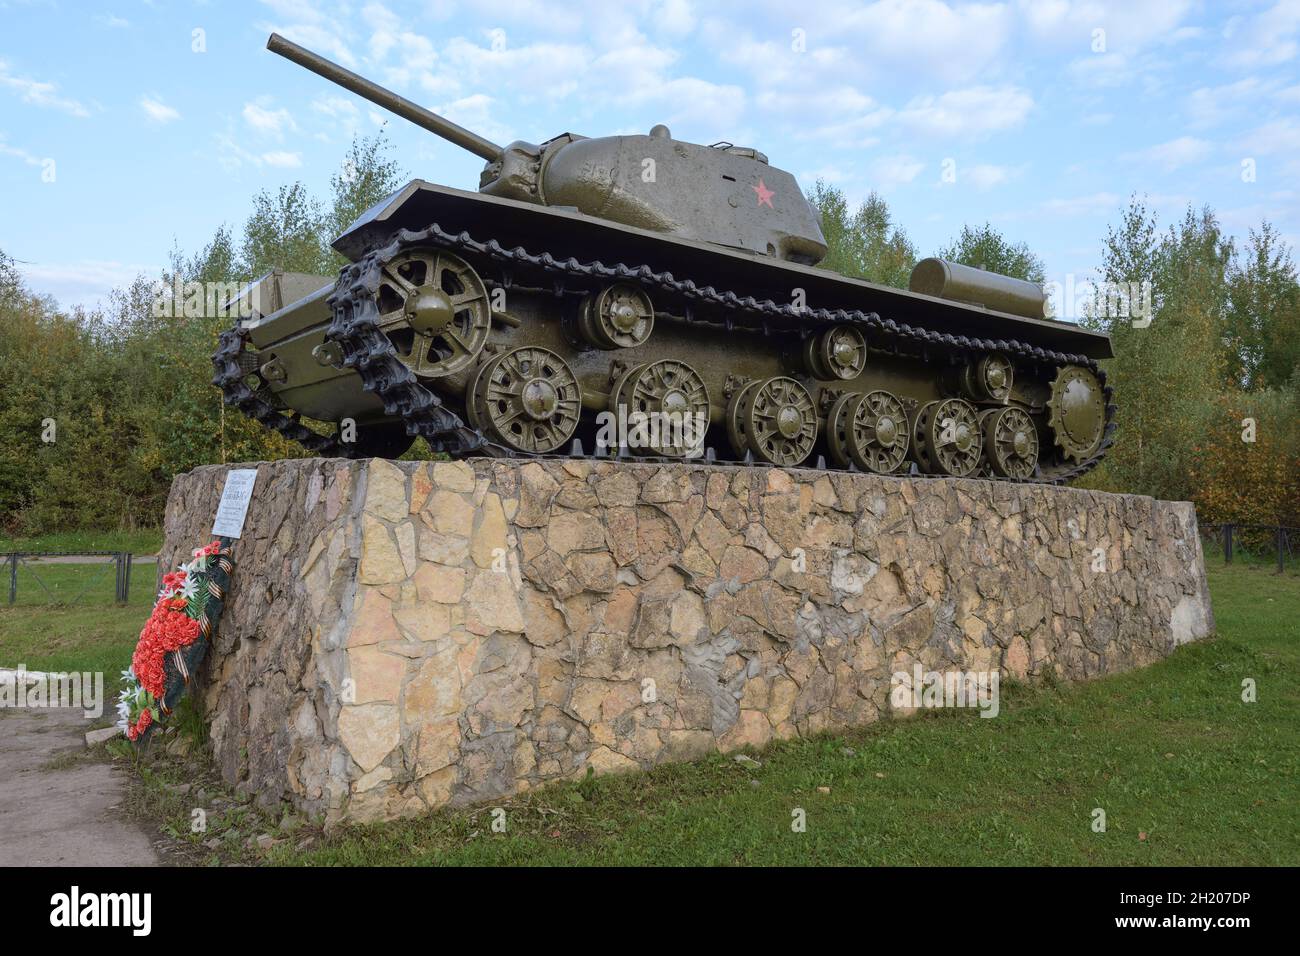 PARFINO, RUSSLAND - 11. SEPTEMBER 2021: Denkmal des sowjetischen schweren Panzers KV-1S am Septembermorgen Stockfoto